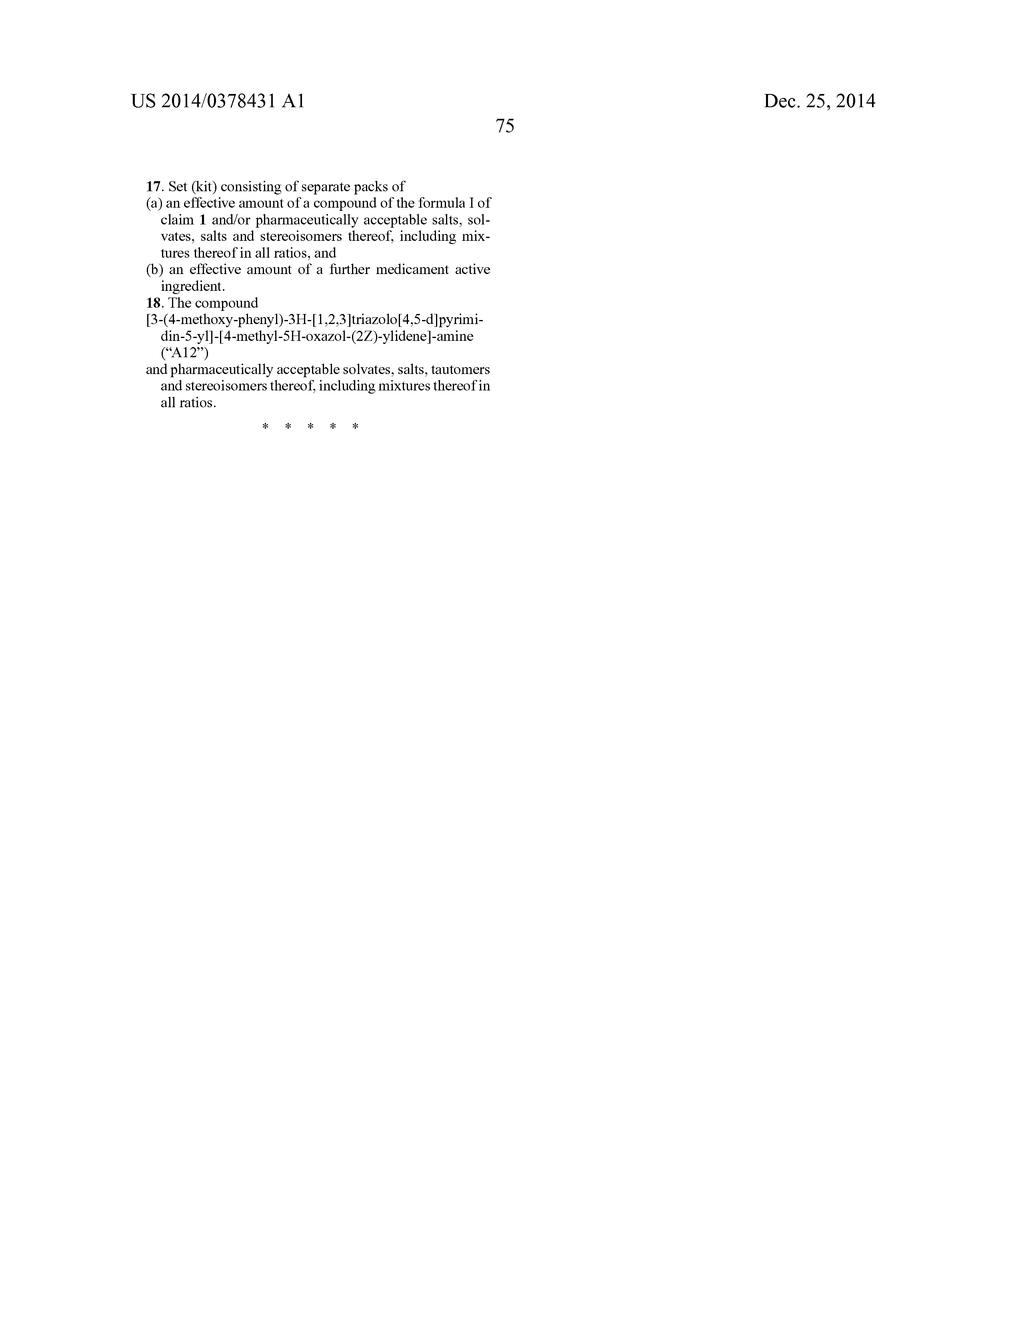 TRIAZOLO[4,5-D]PYRIMIDINE DERIVATIVES - diagram, schematic, and image 76